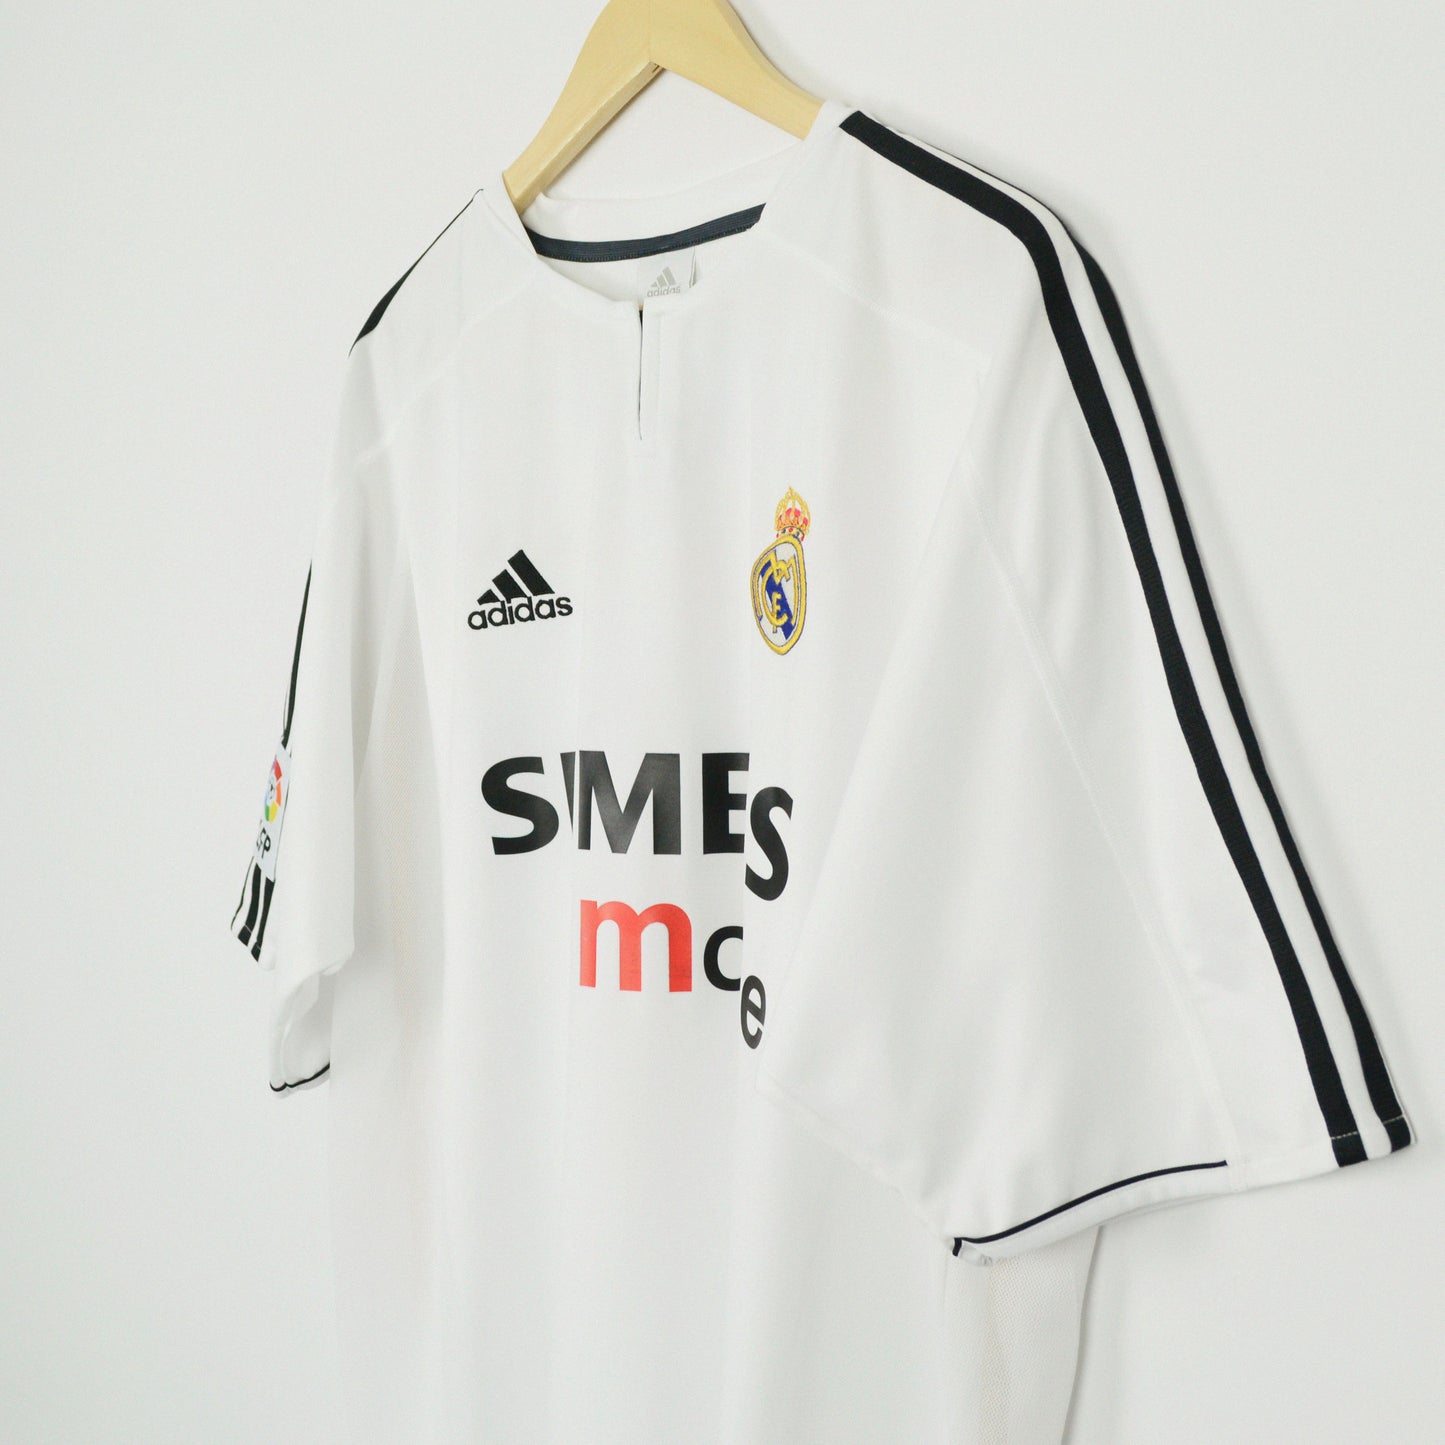 2003-04 Adidas Real Madrid Home Shirt 'Ronaldo 9' XL